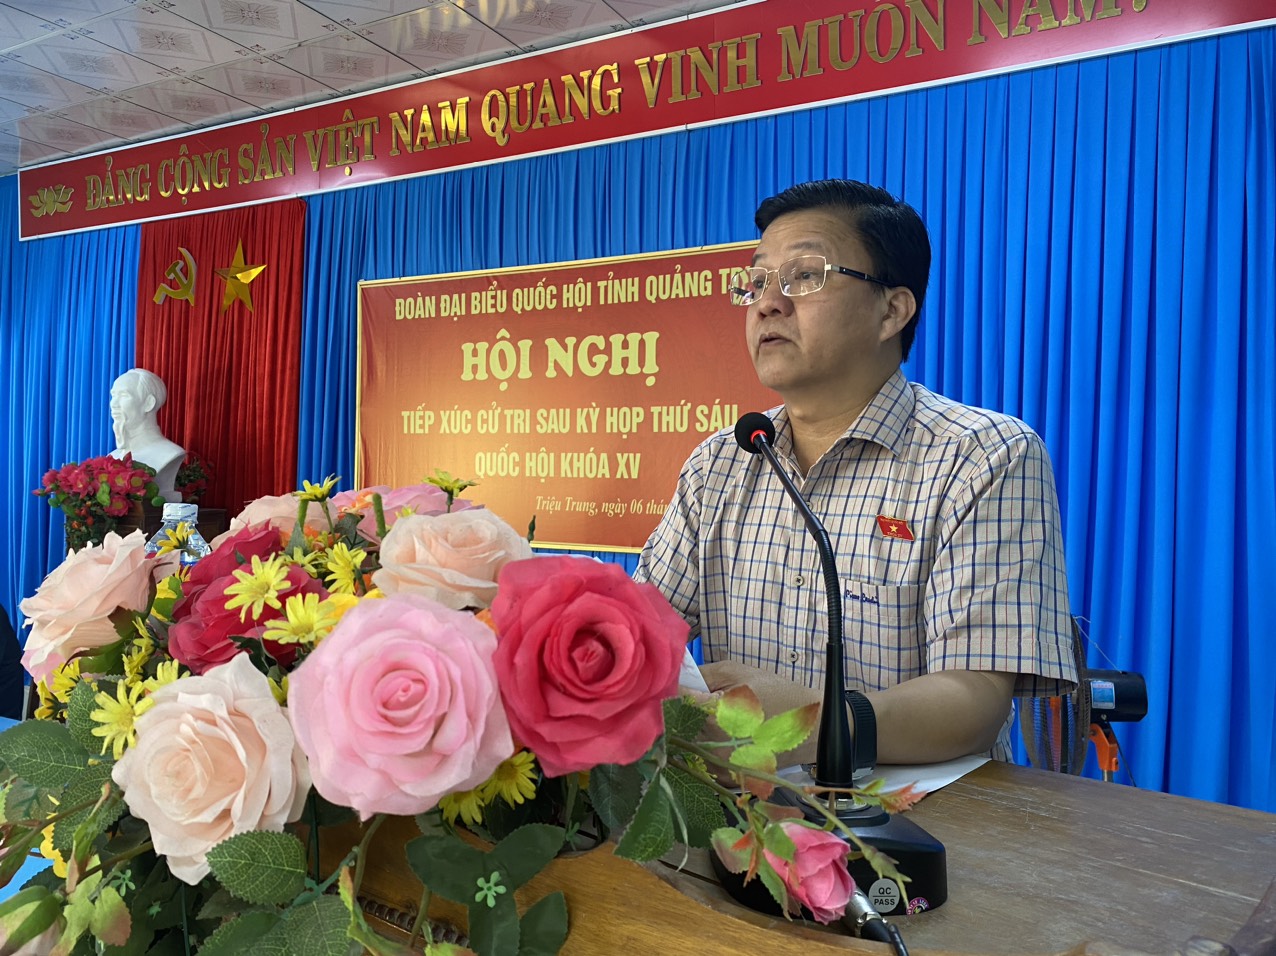 Nguyen Huu Dan